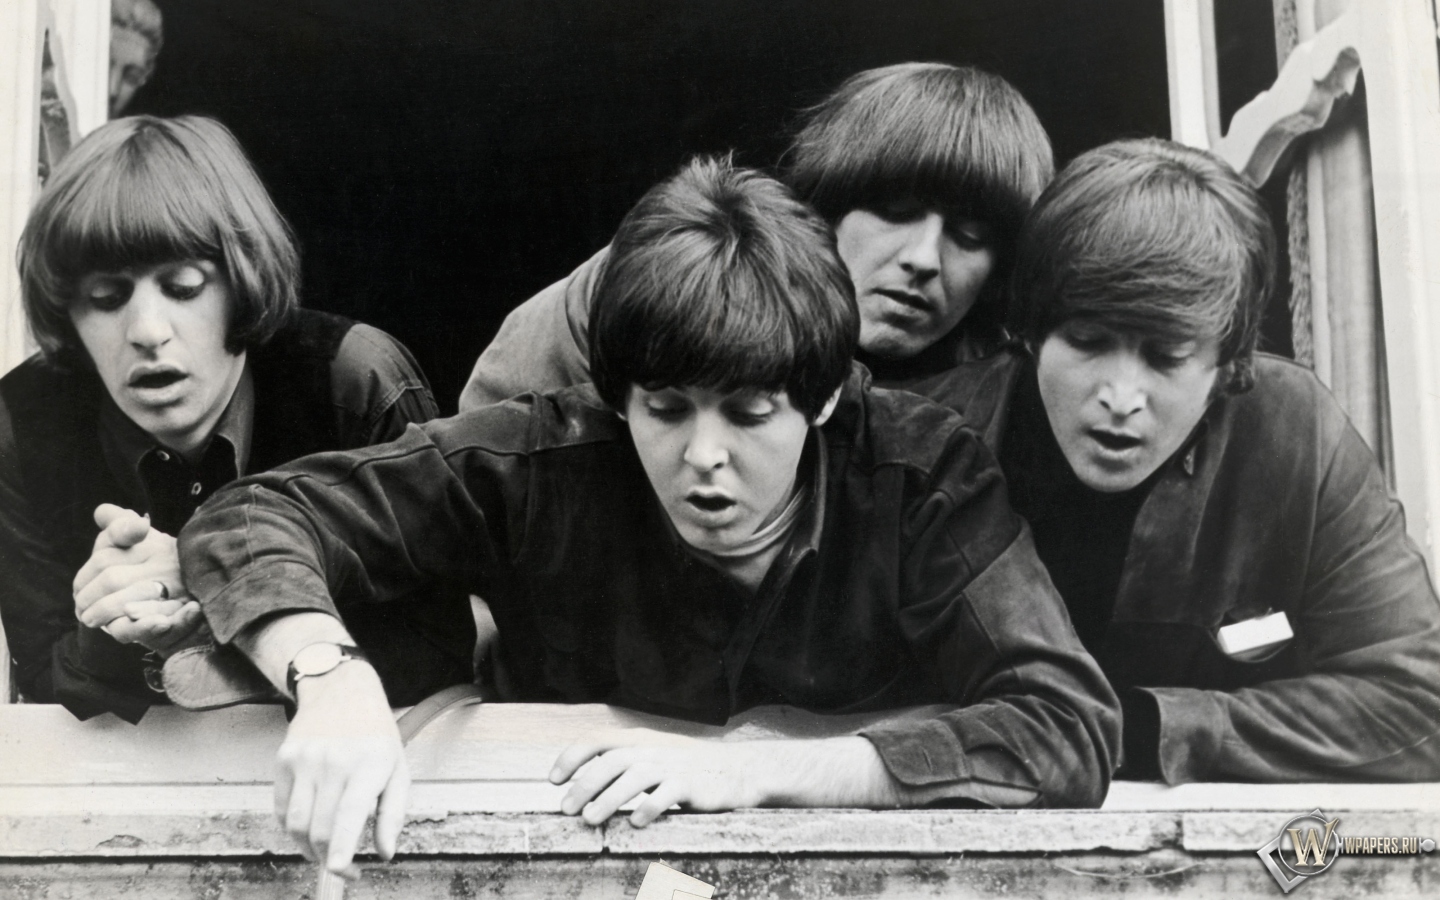 The Beatles 1440x900